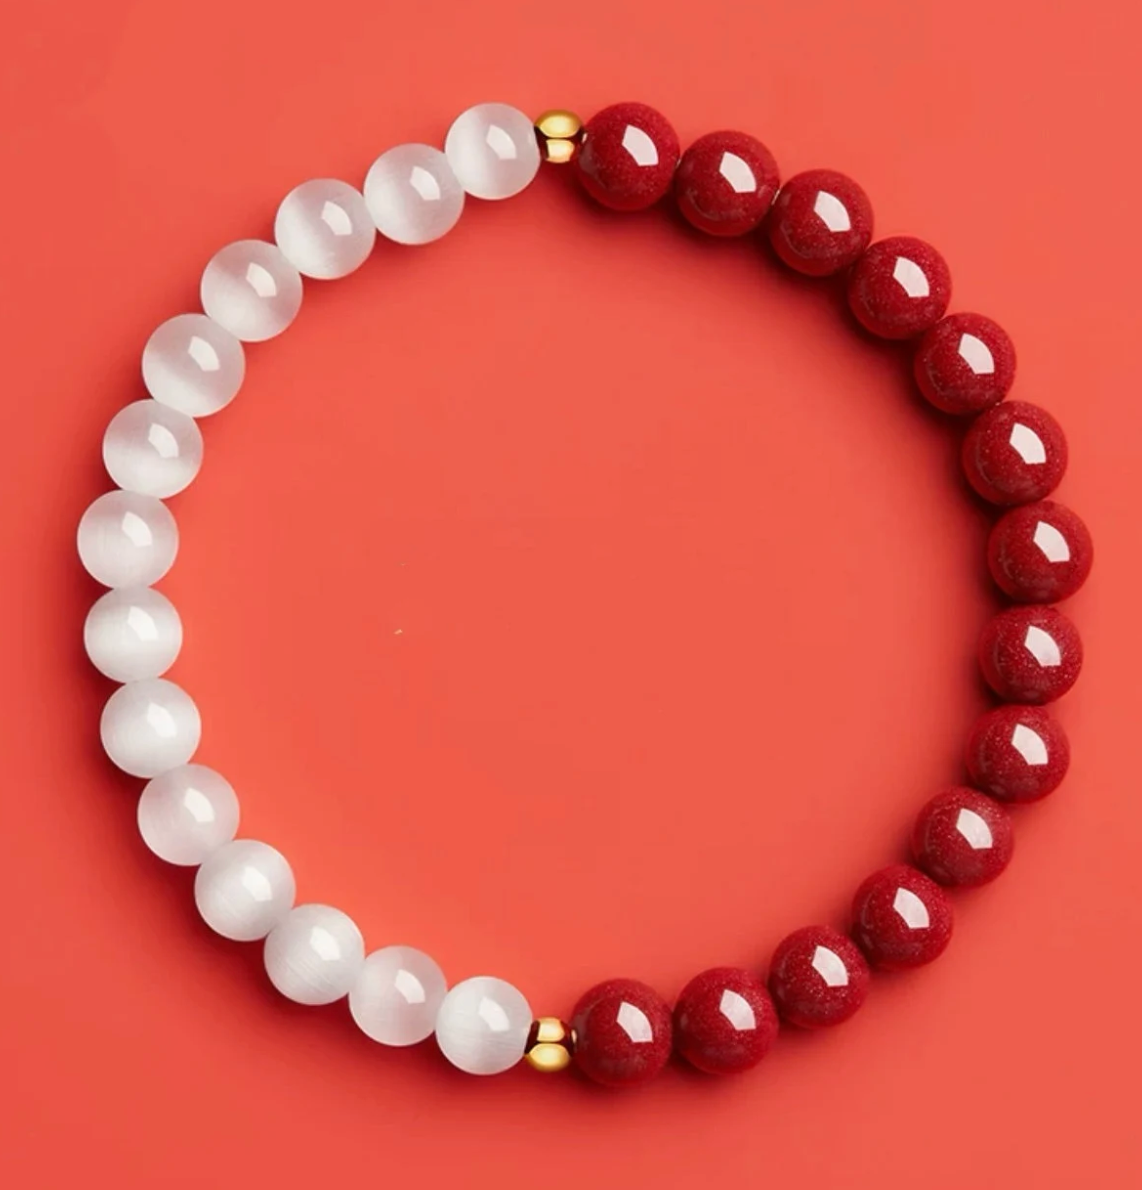 [YinYang] Dynamic Yin Yang Daoism gemstone beads stretchy Bracelet